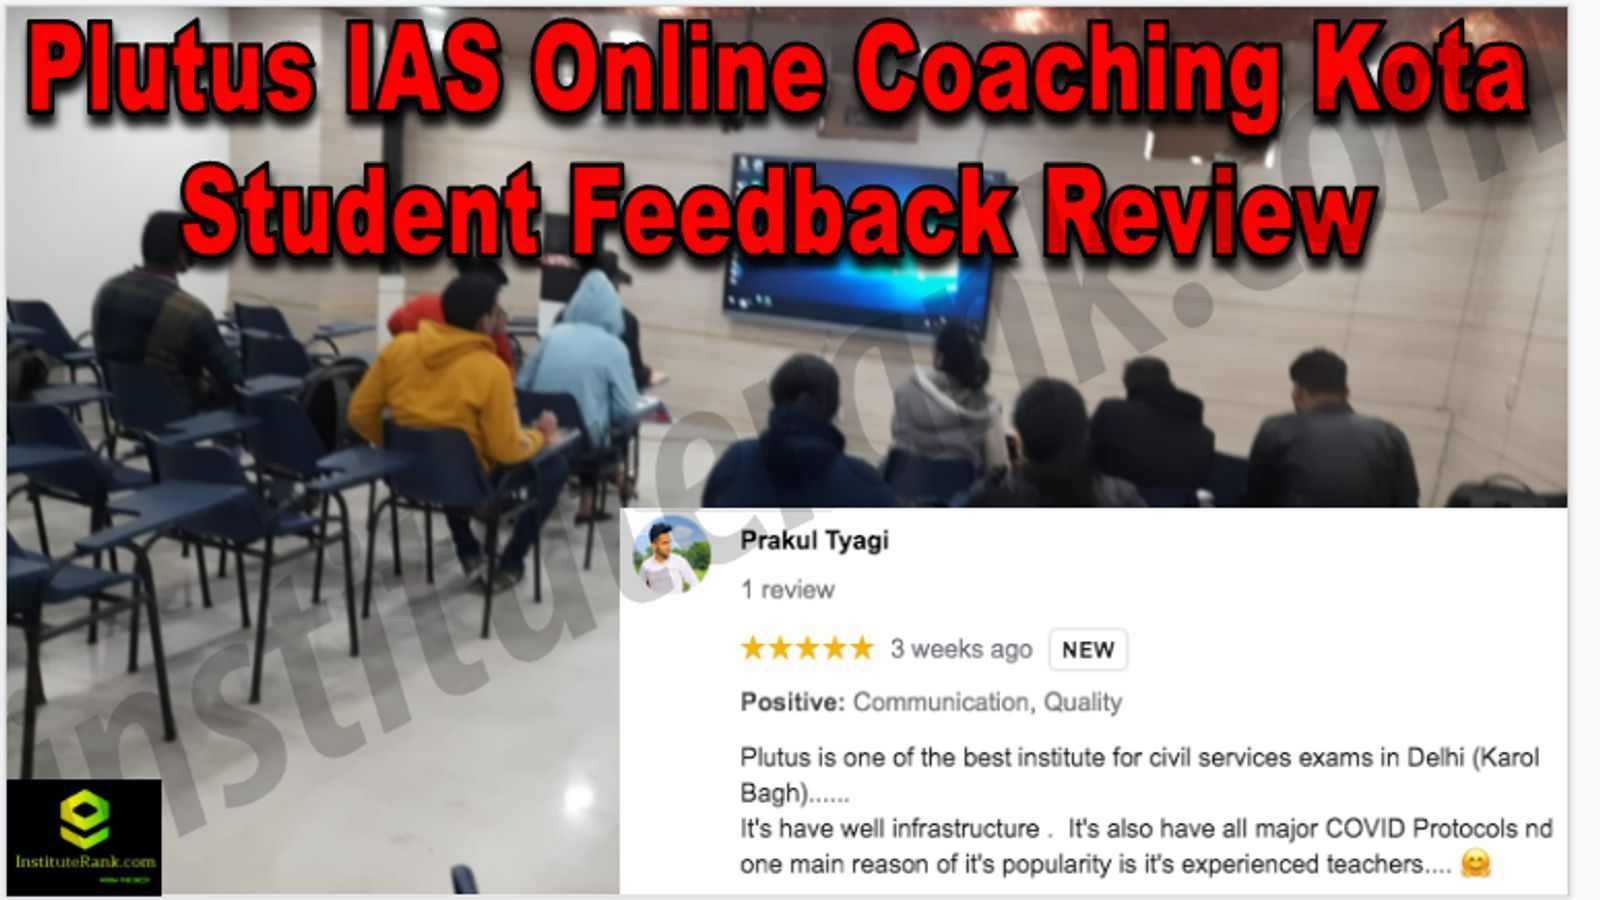 Plutus IAS Online Coaching Kota Student Feedback Reviews